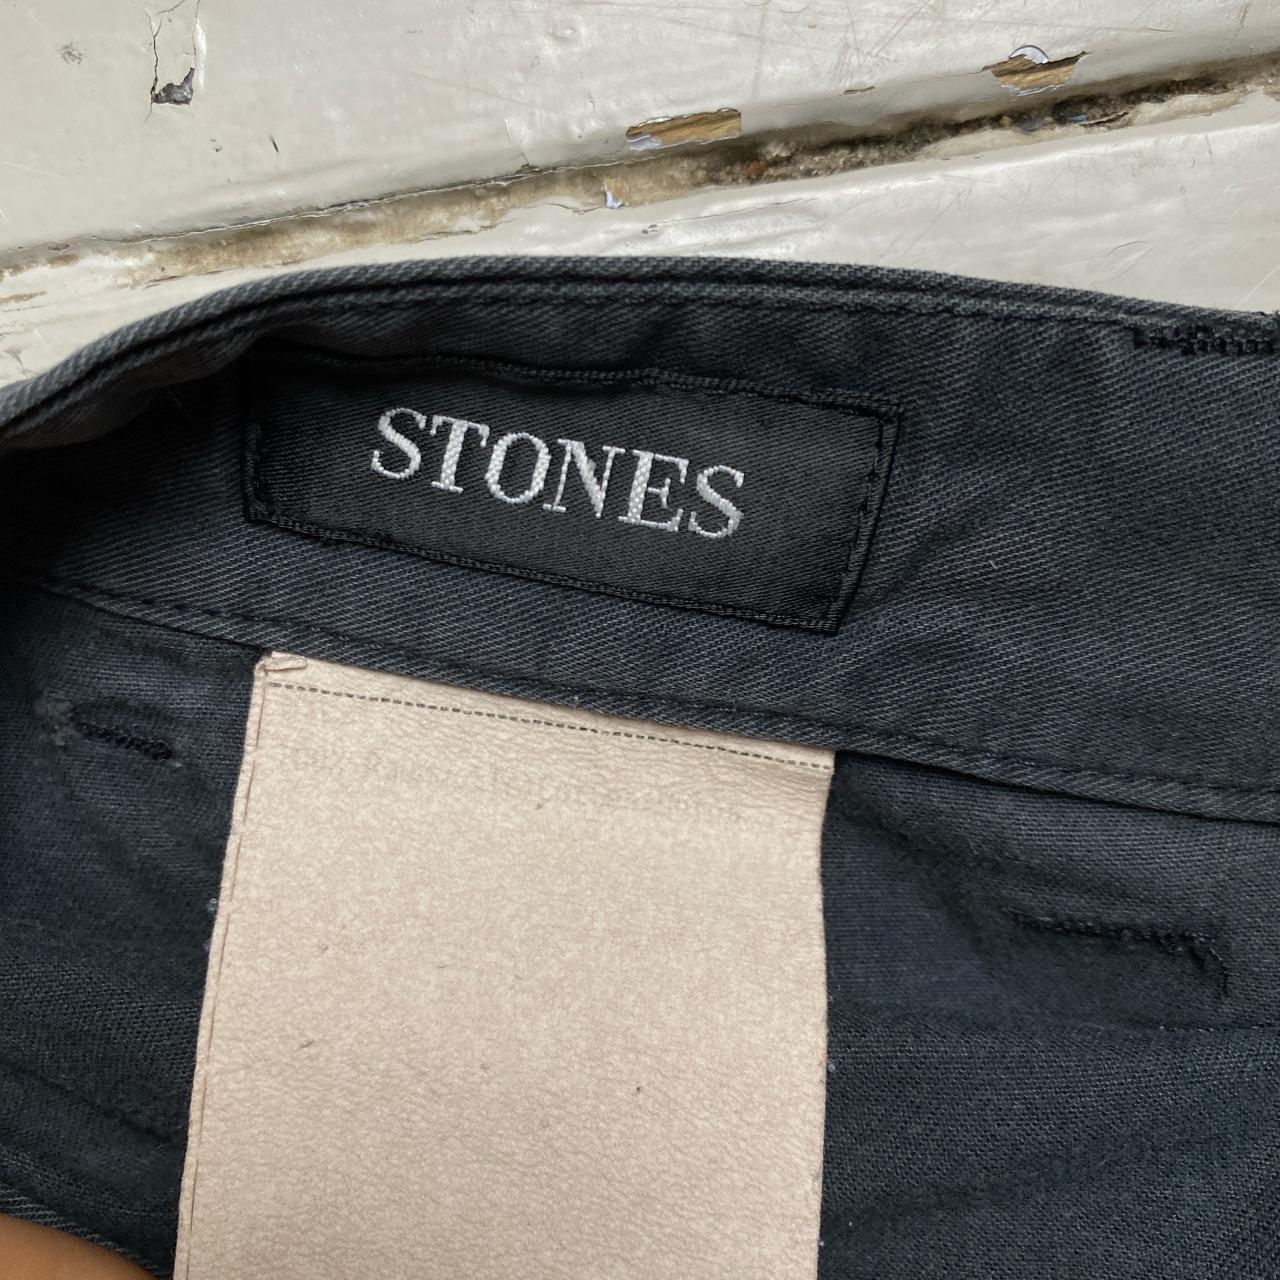 Stones Grey Cargo Shorts